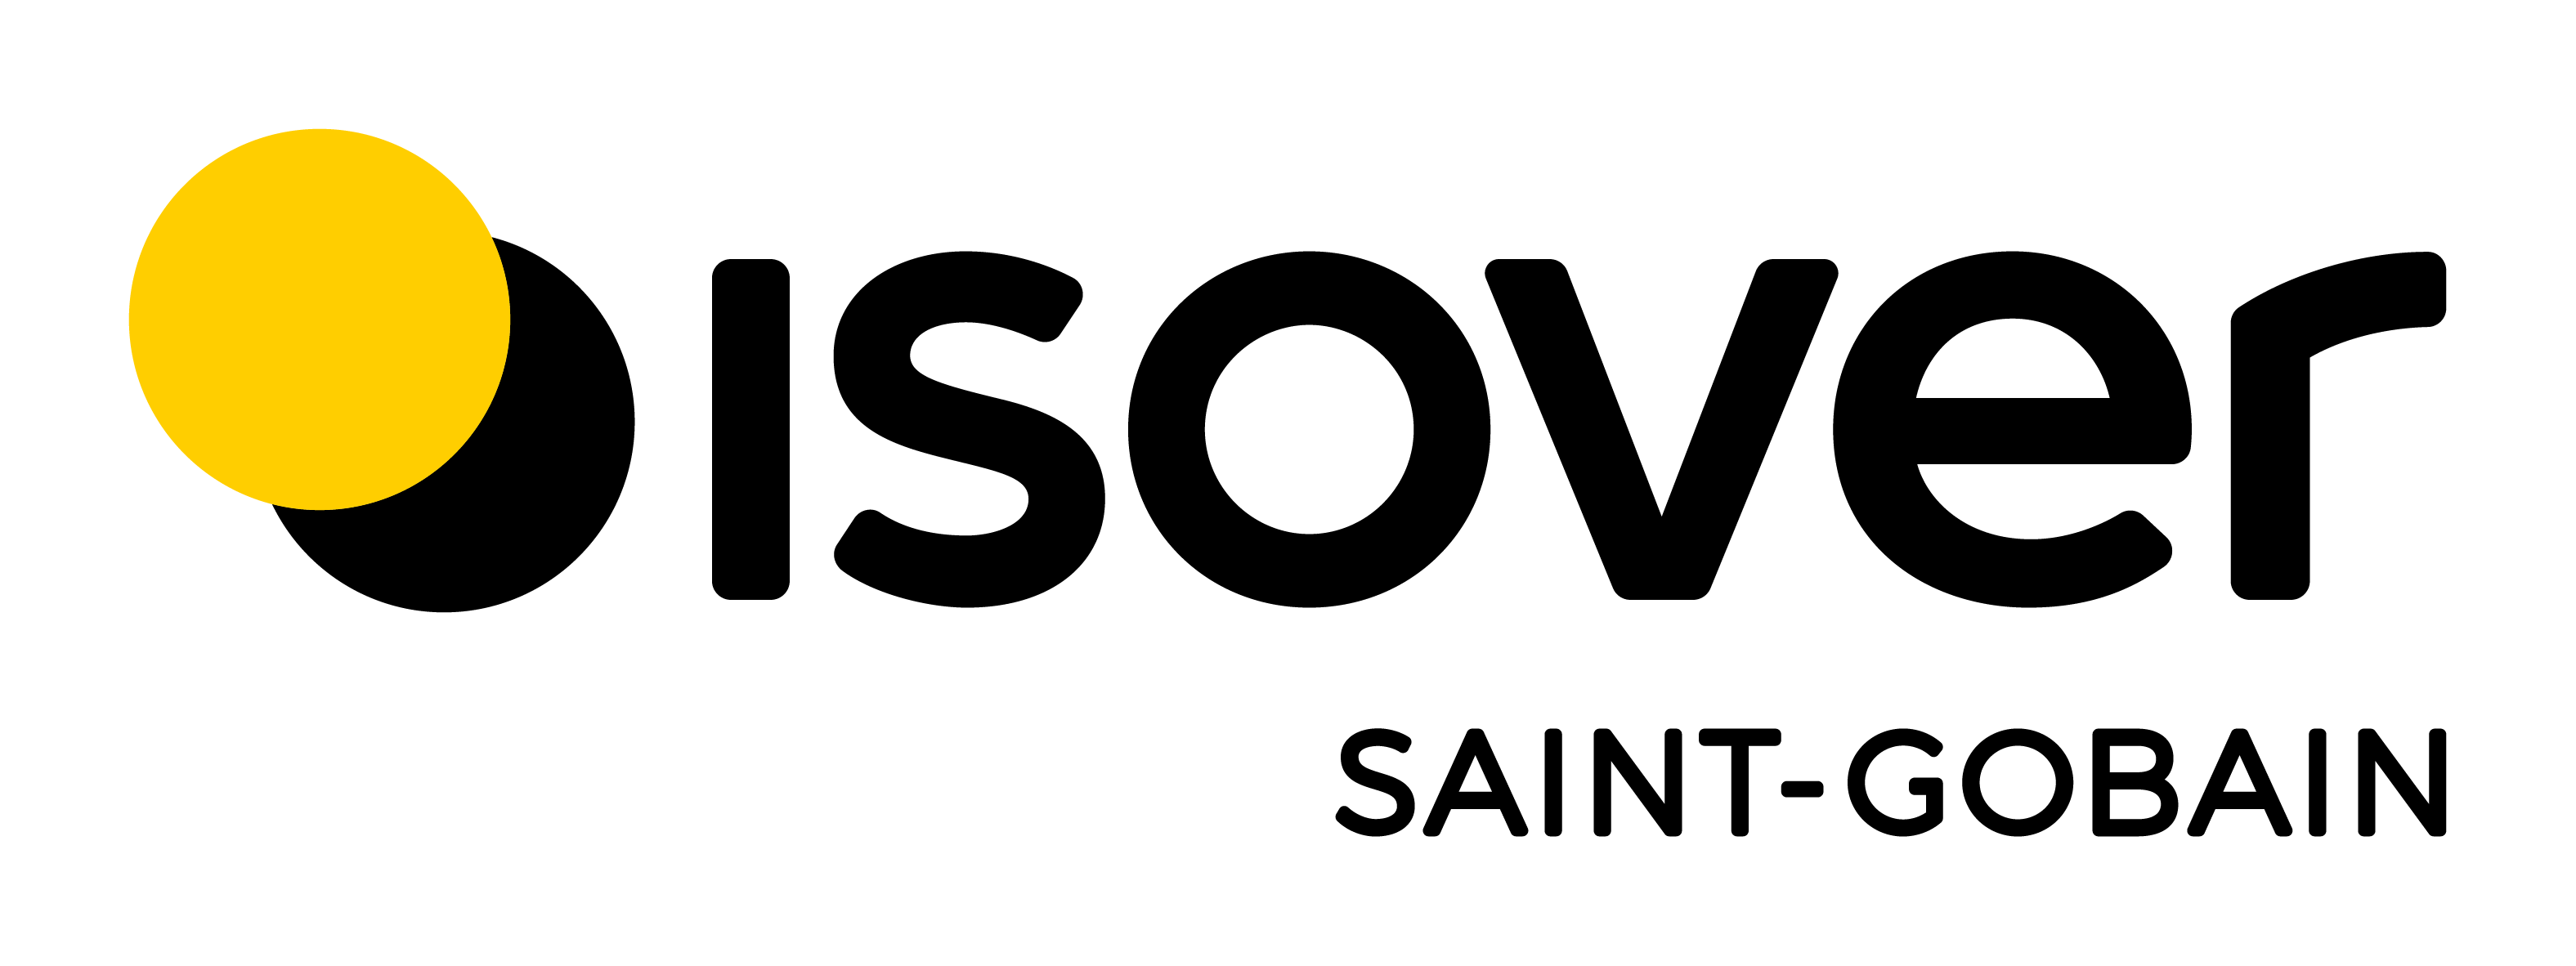 Isover - Saint-Gobain